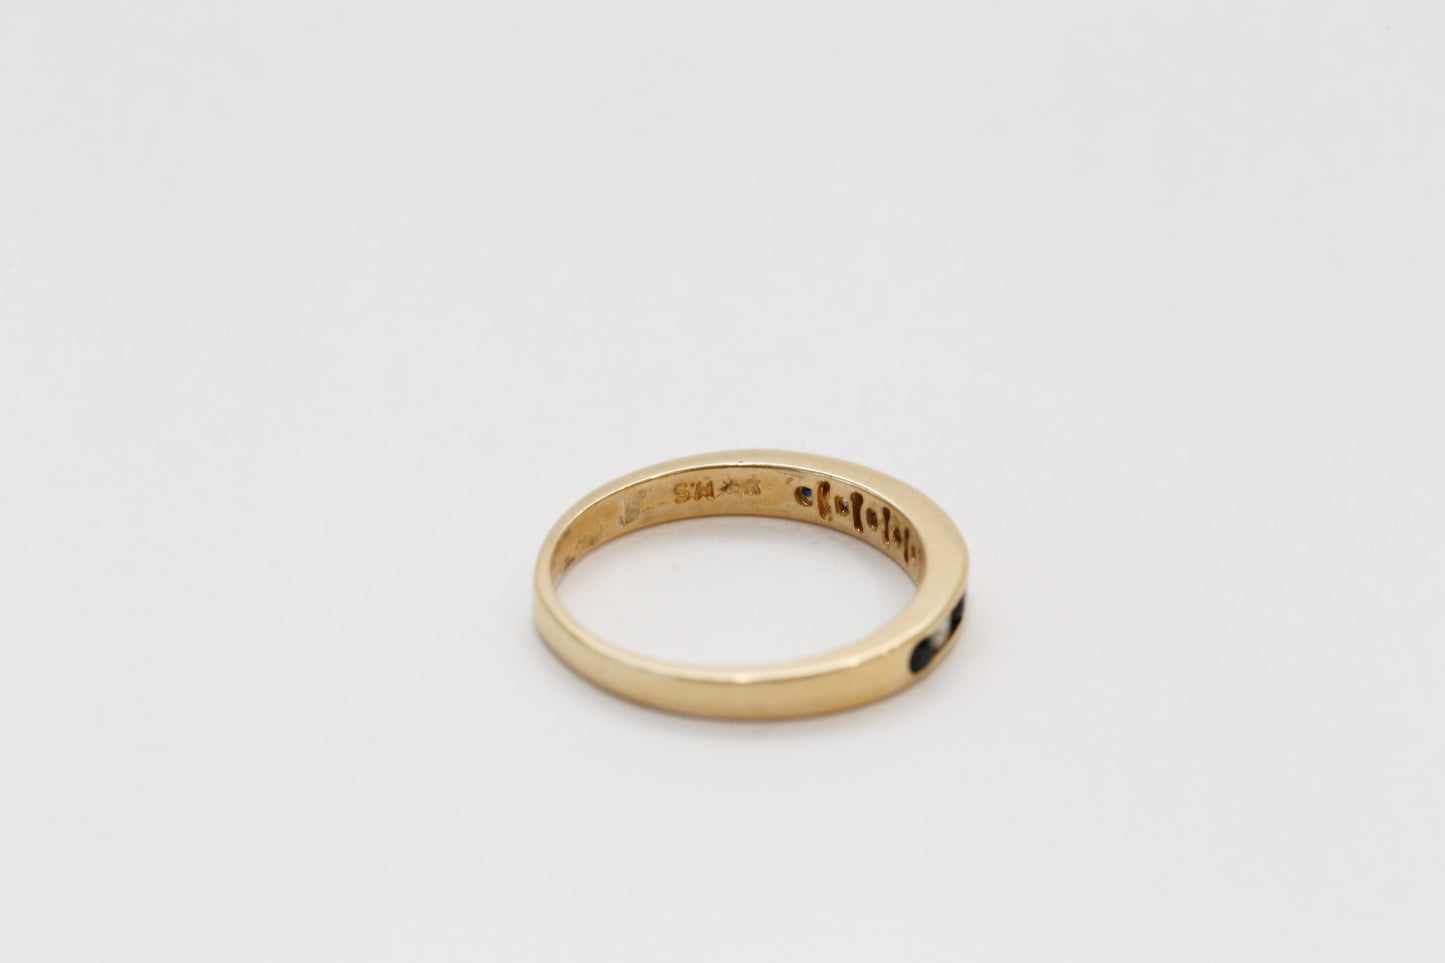 14k Yellow Gold Sapphire & Diamond Ring, Size 6.25 - 2.2g